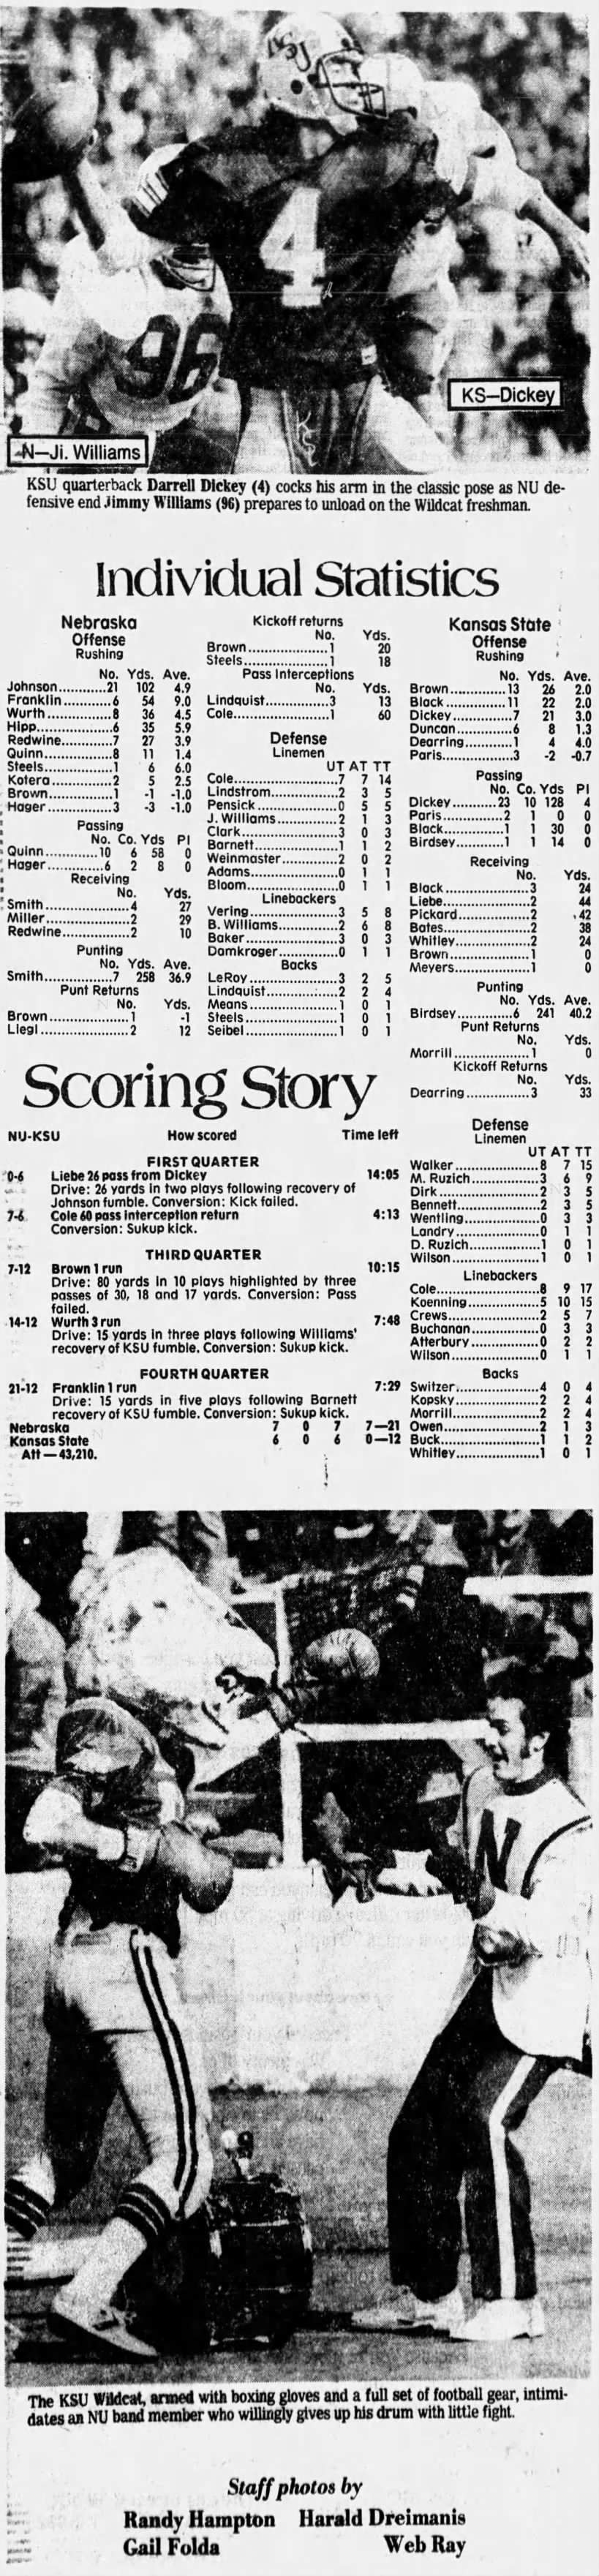 1979 Nebraska-KSU stats & scoring